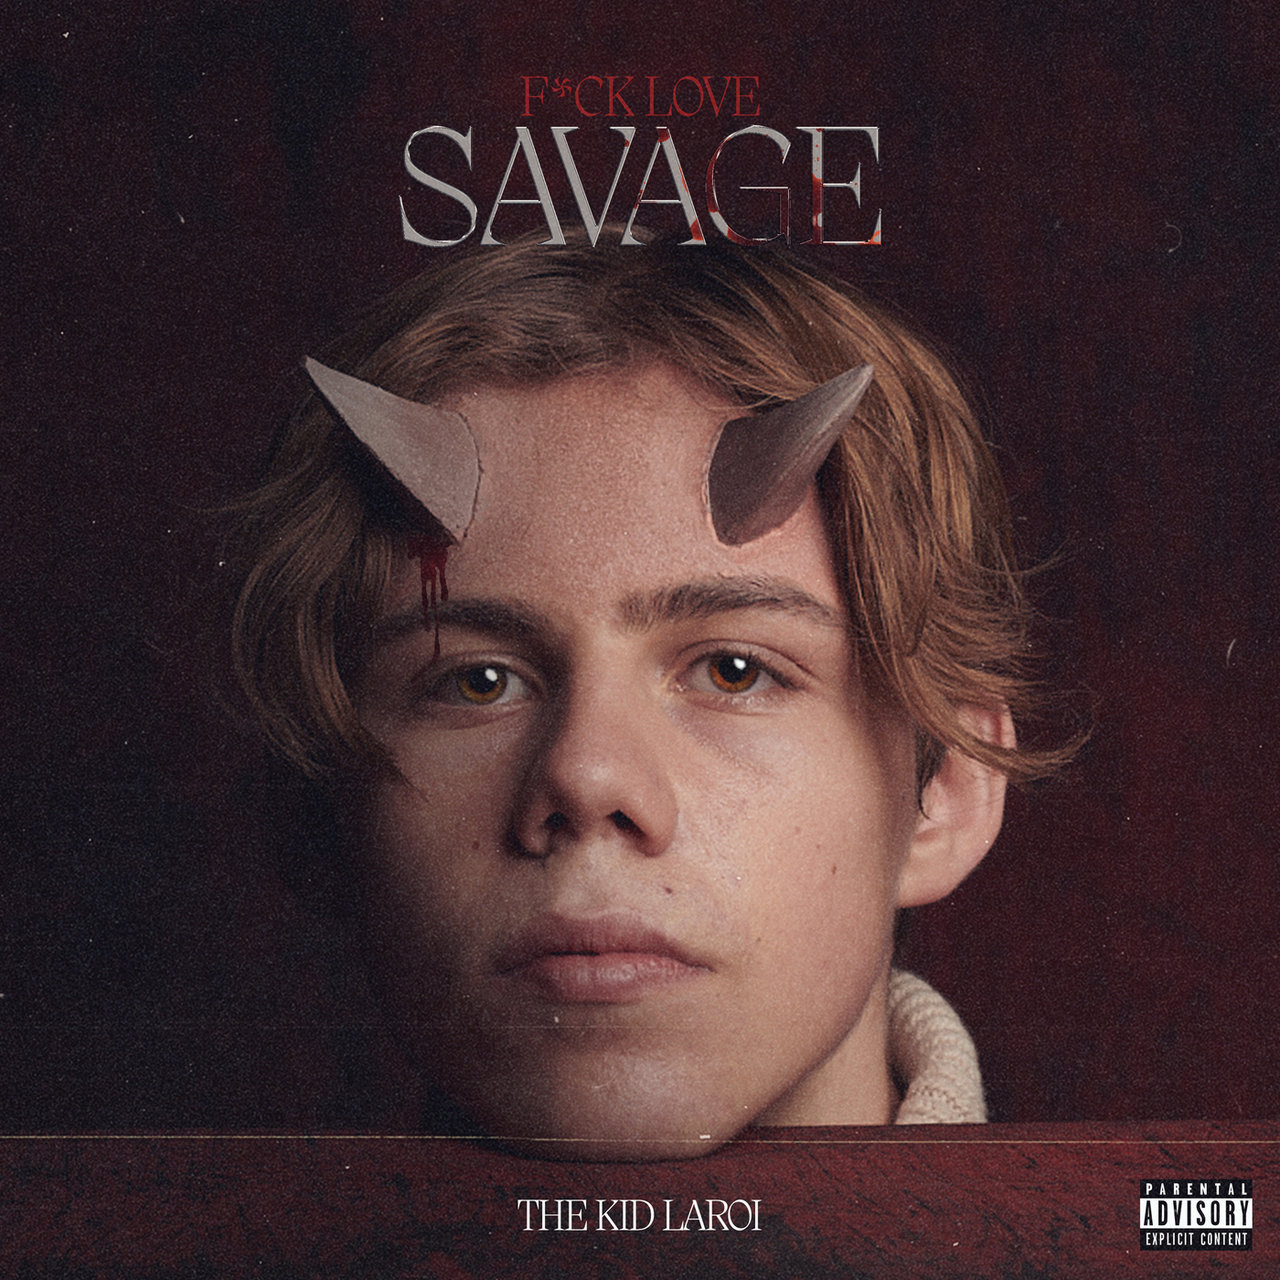 The Kid Laroi - Fuck Love (Savage) (Cover)